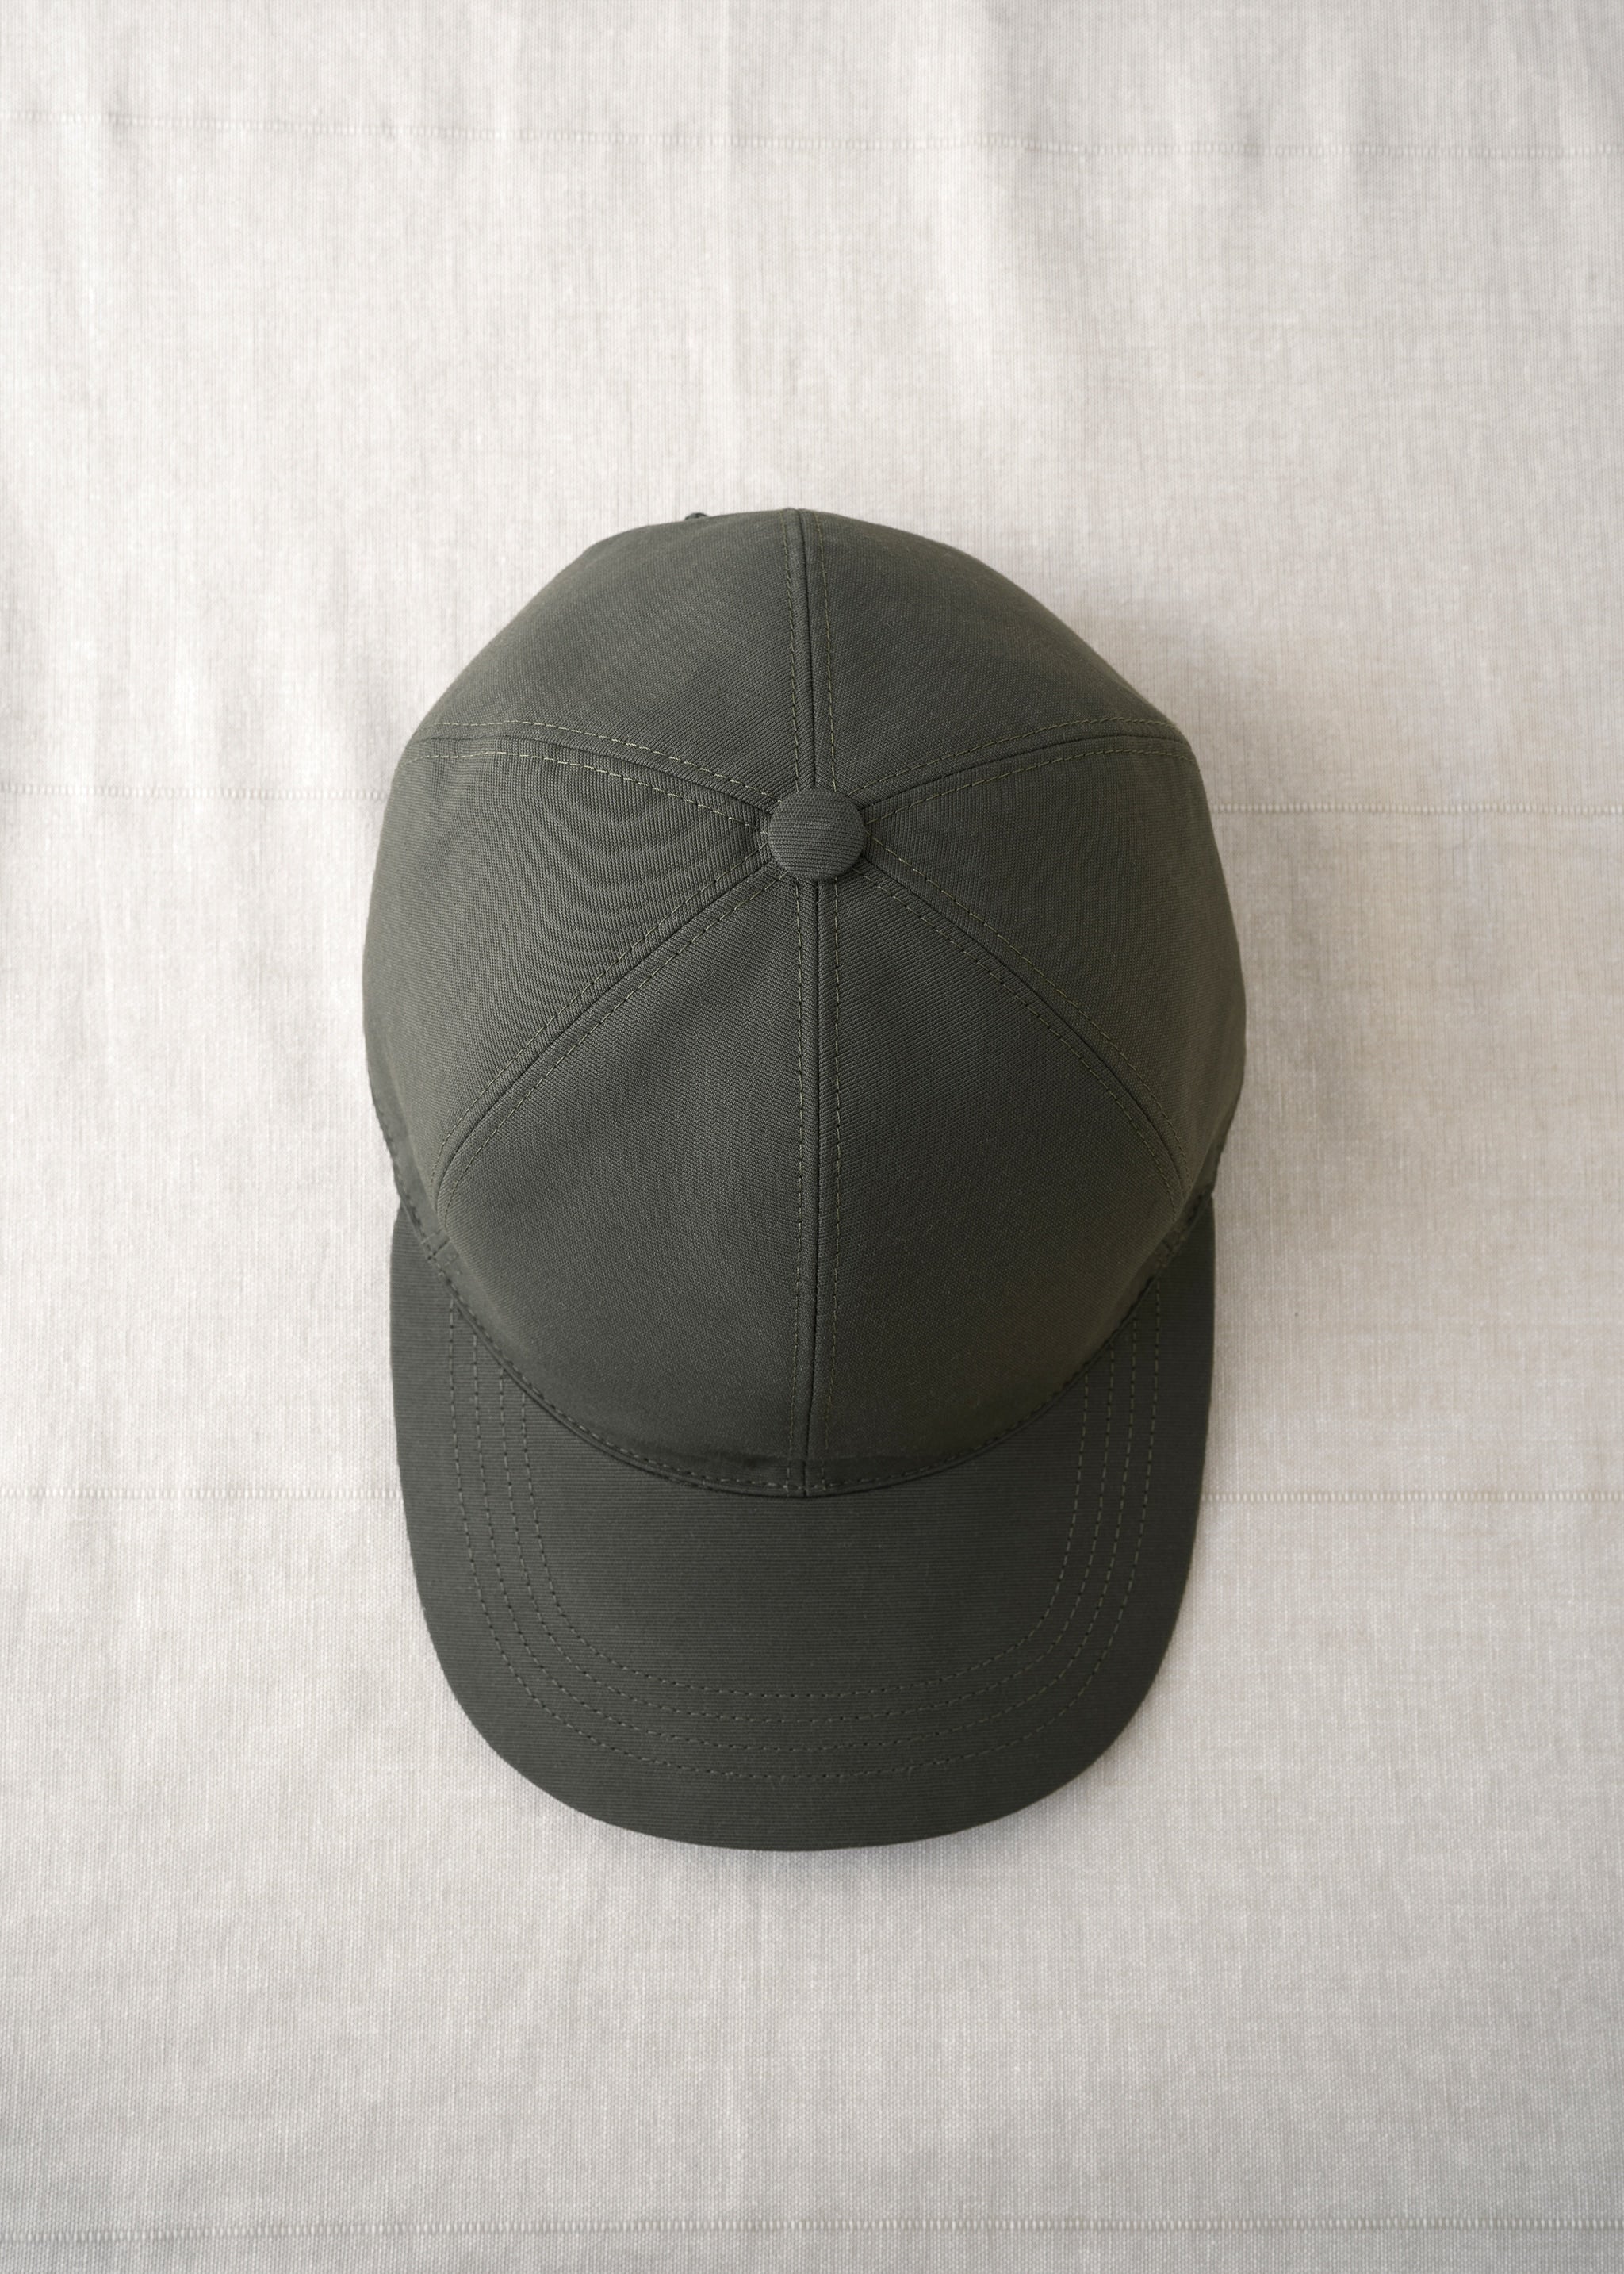 Yacaia Y-0001 Baseball Cap - Olive (Cotton blend)